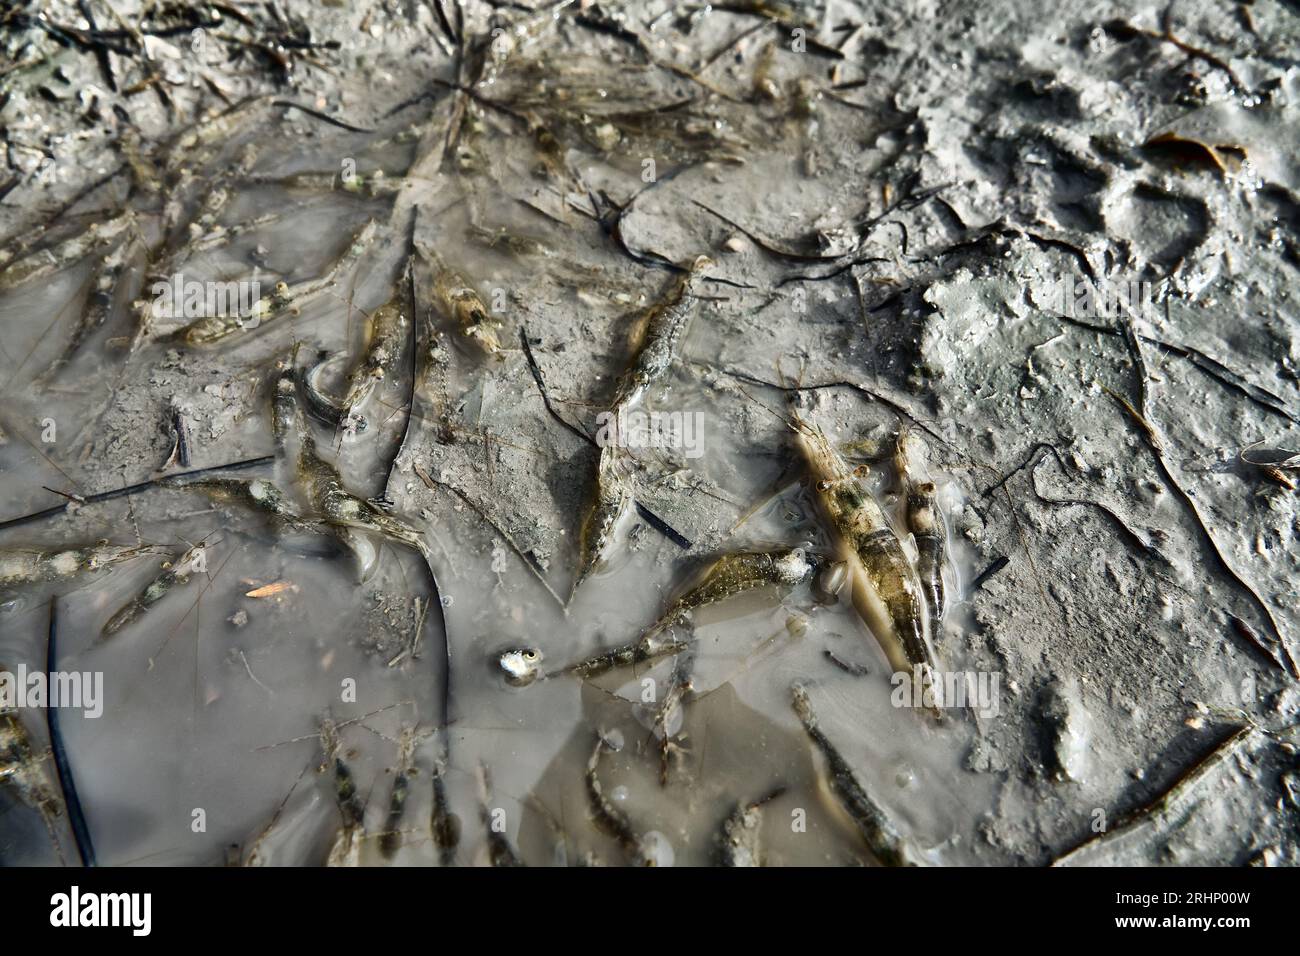 Offshore, wind., Shrimp, die, remaining, muddy, water, lagoon Stock Photo